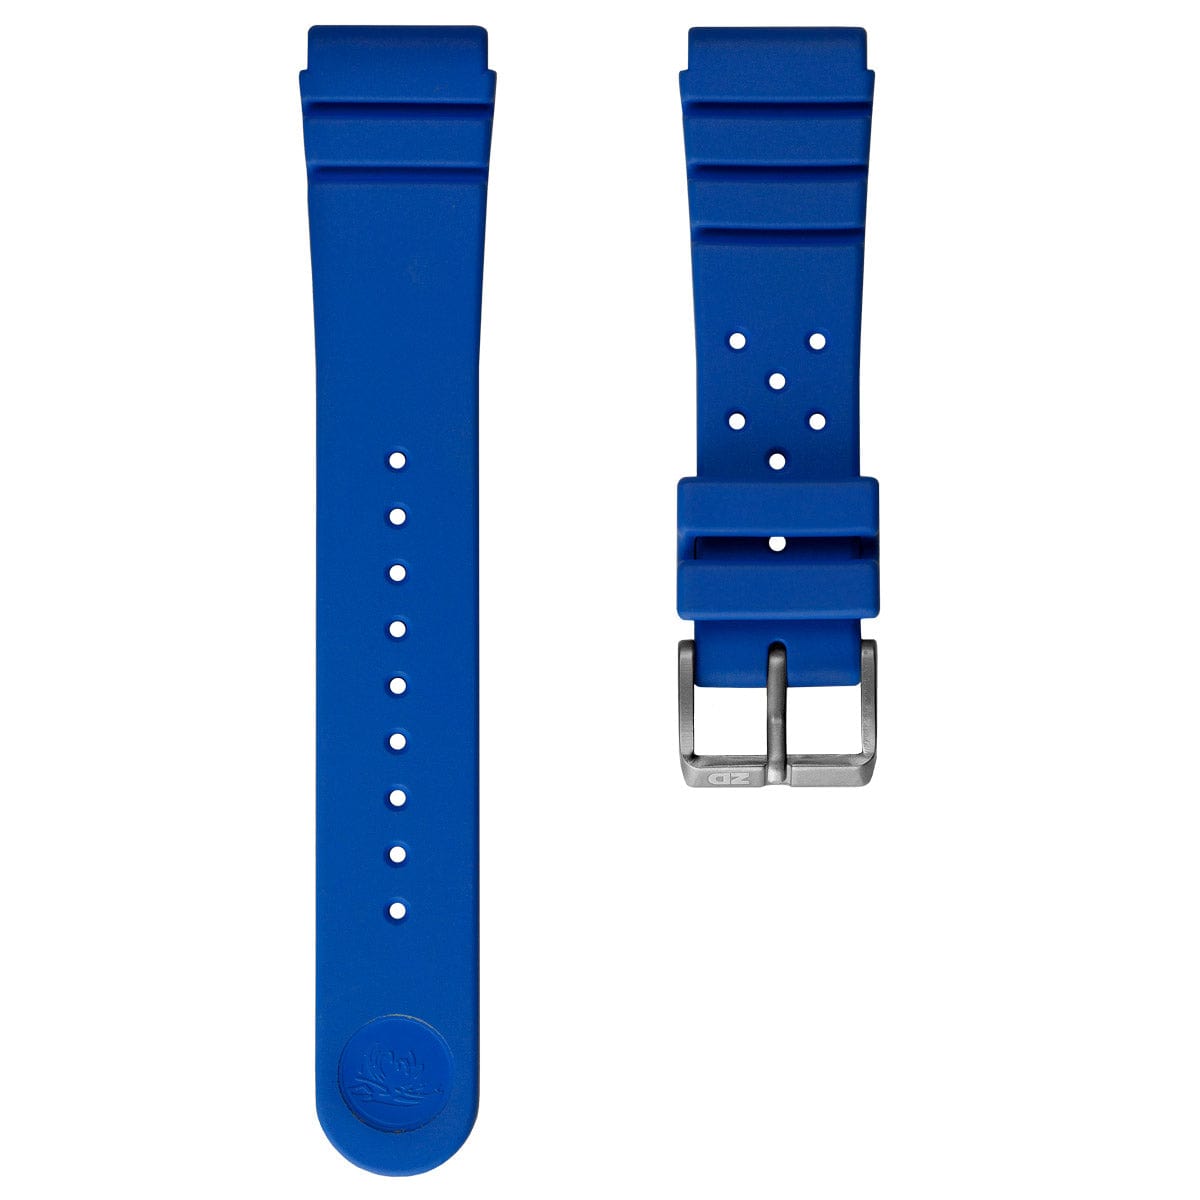 ZULUDIVER 284 Italian Rubber Diver's Watch Strap - Royal Blue